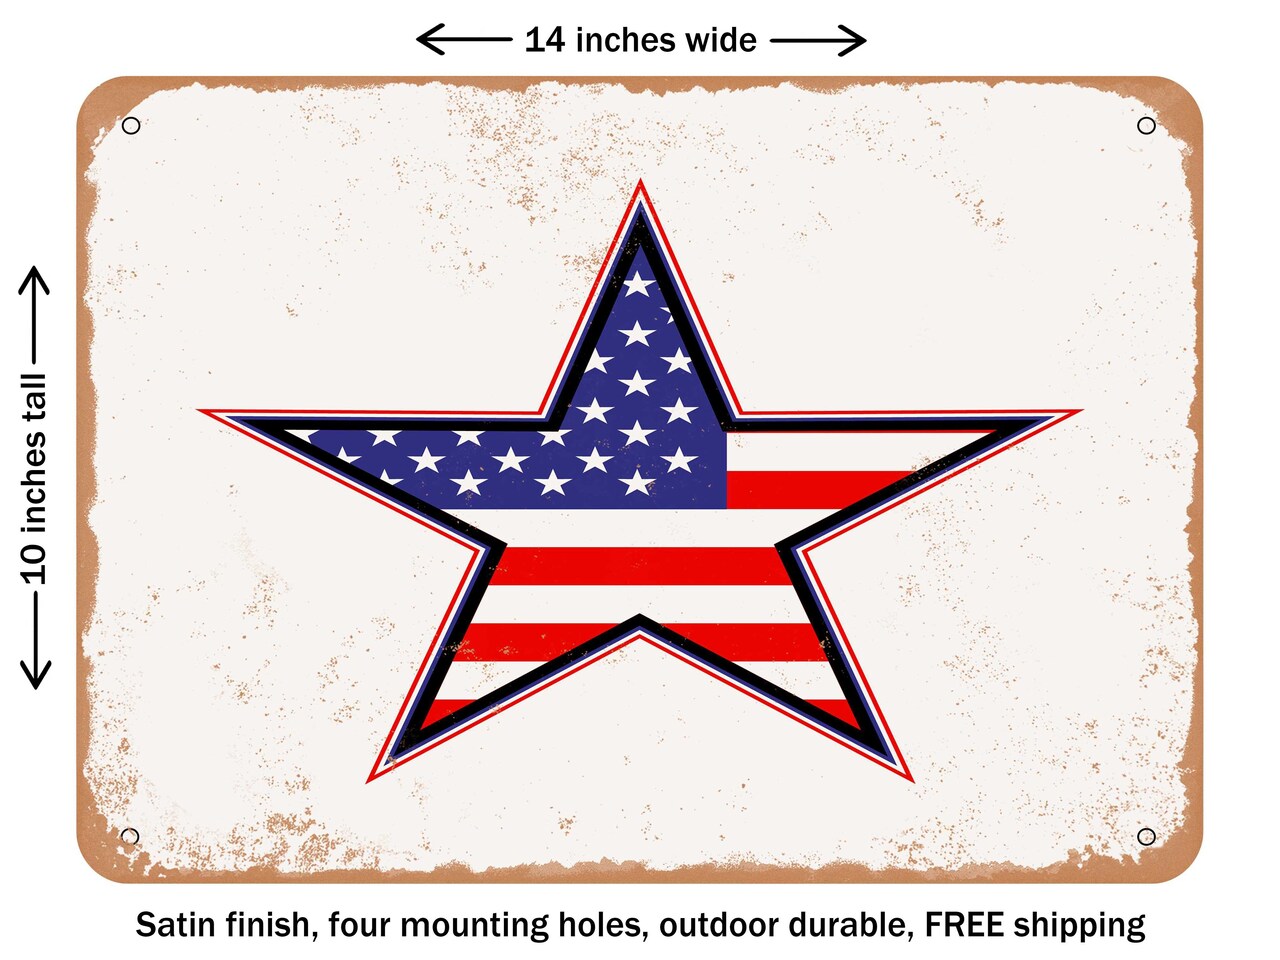 DECORATIVE METAL SIGN - d Star American Flag - Vintage Rusty Look